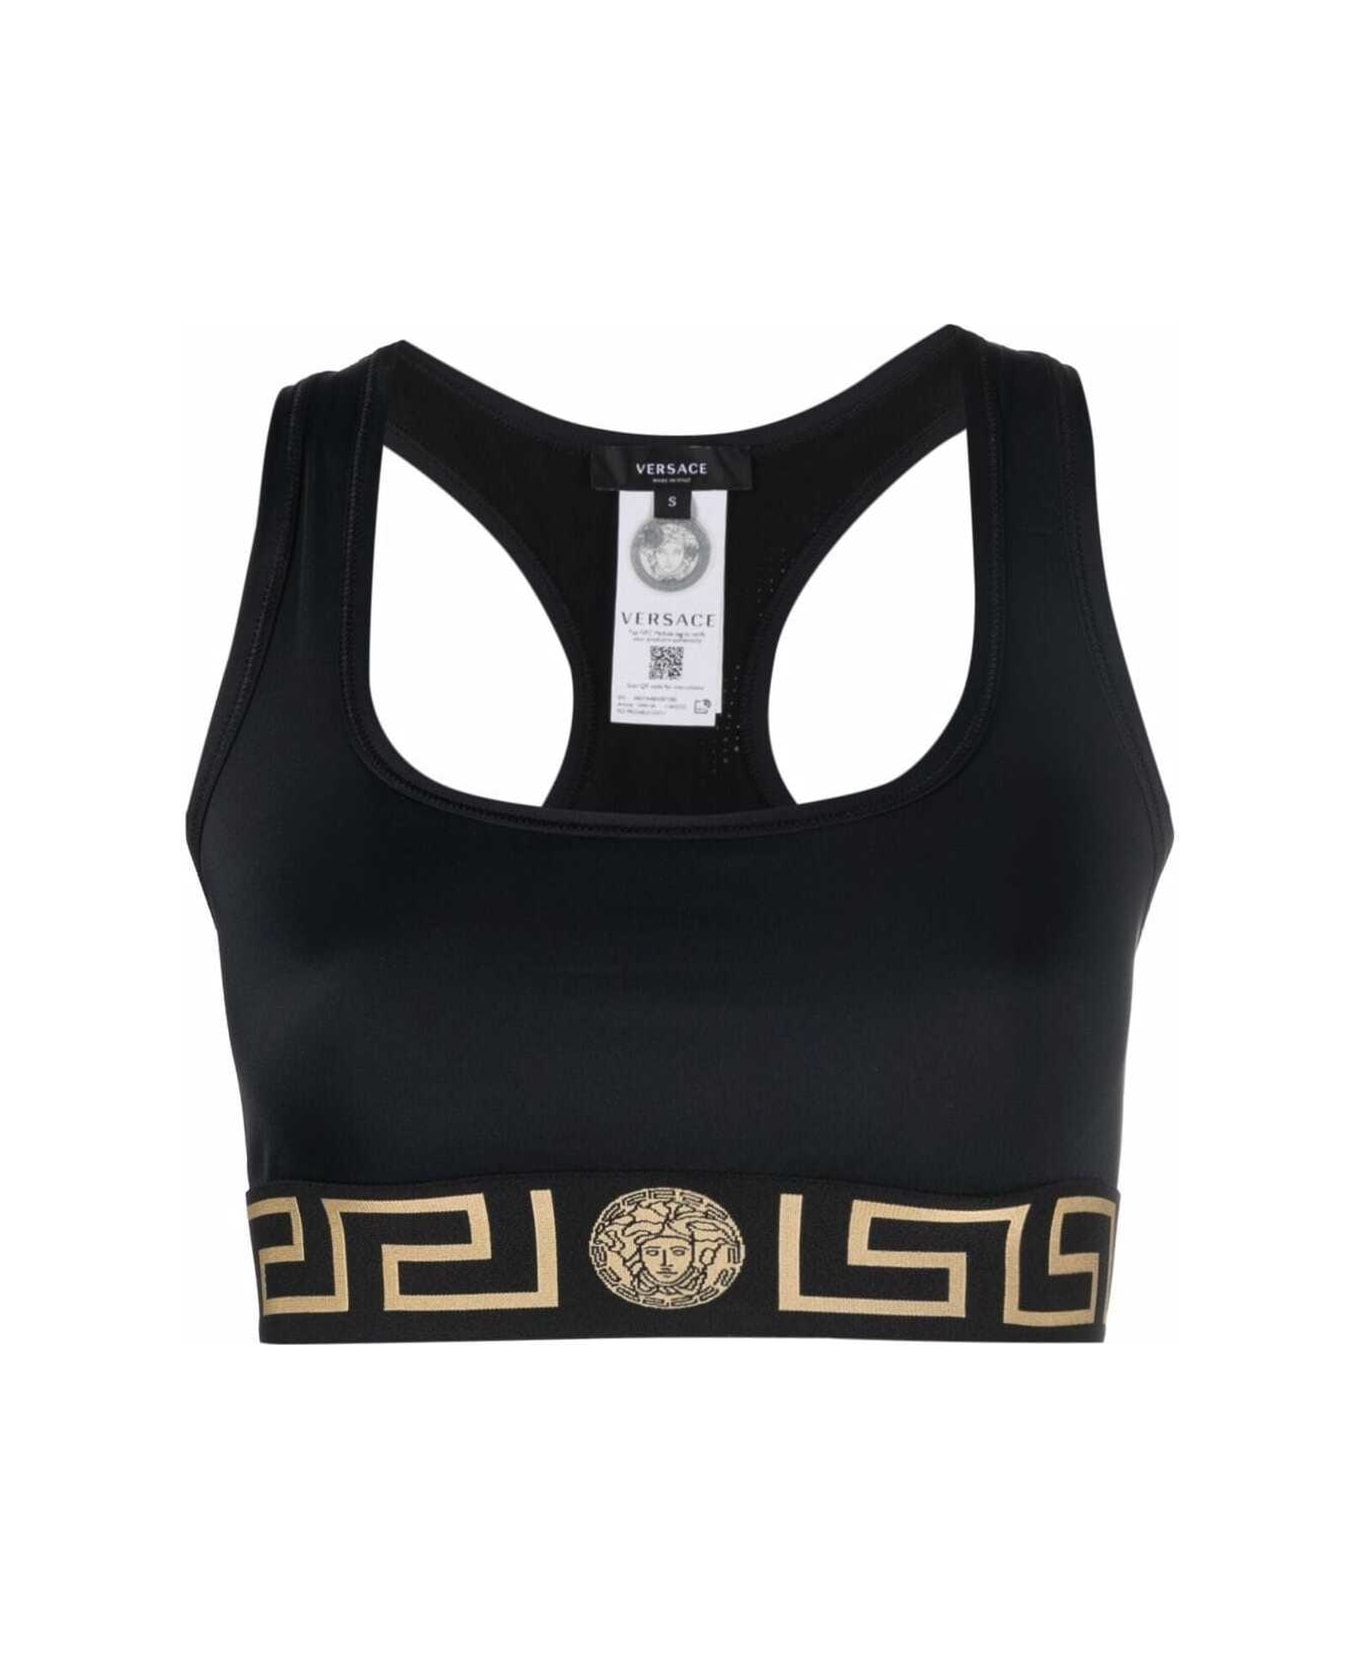 Versace Women's Black Stretch Fabric Top With  Logo - Black